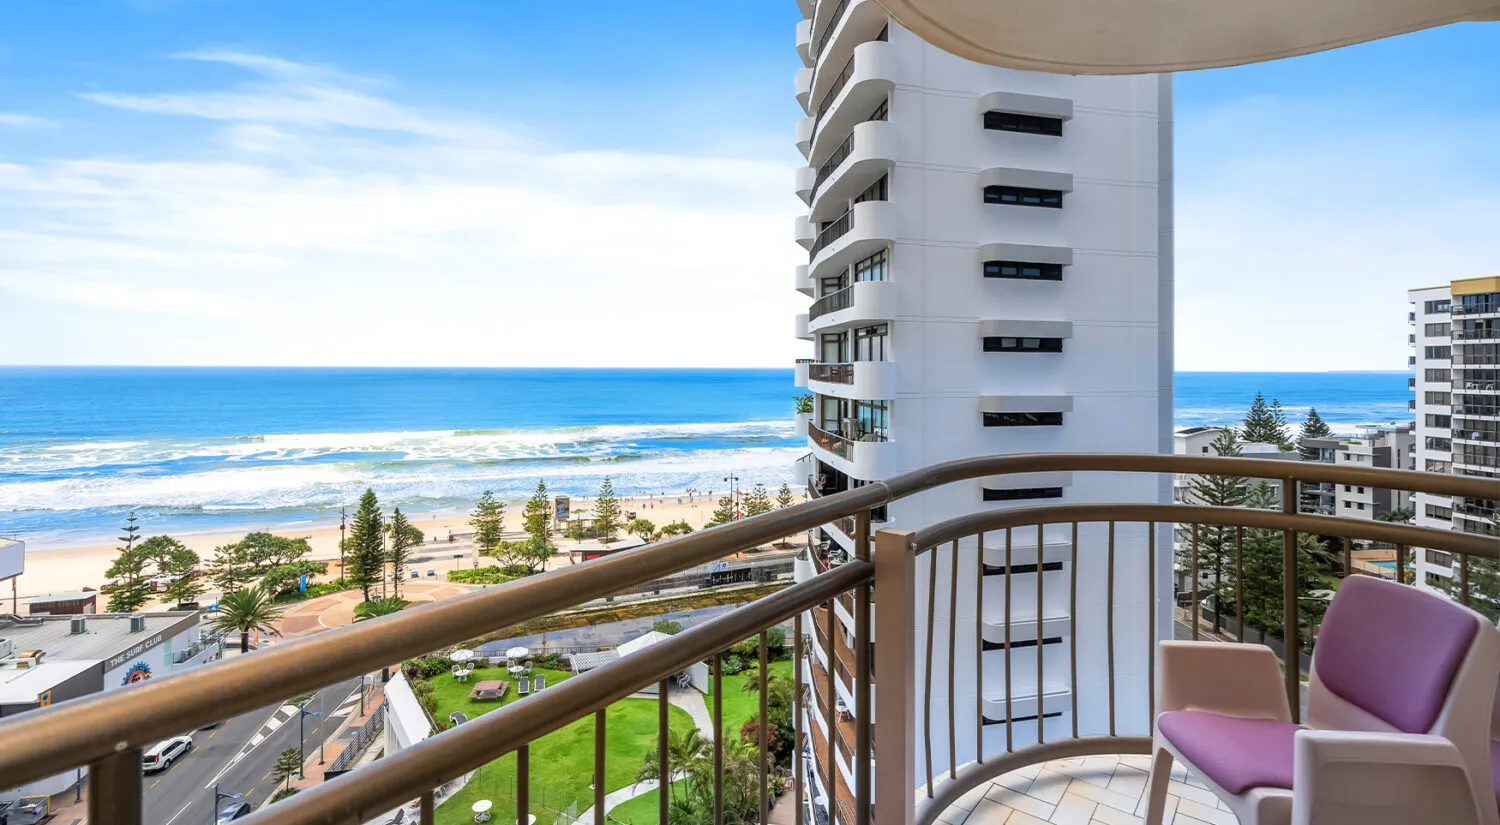 Surfers Paradise Ocean view Gold Coast, AUS - Best Price Guarantee